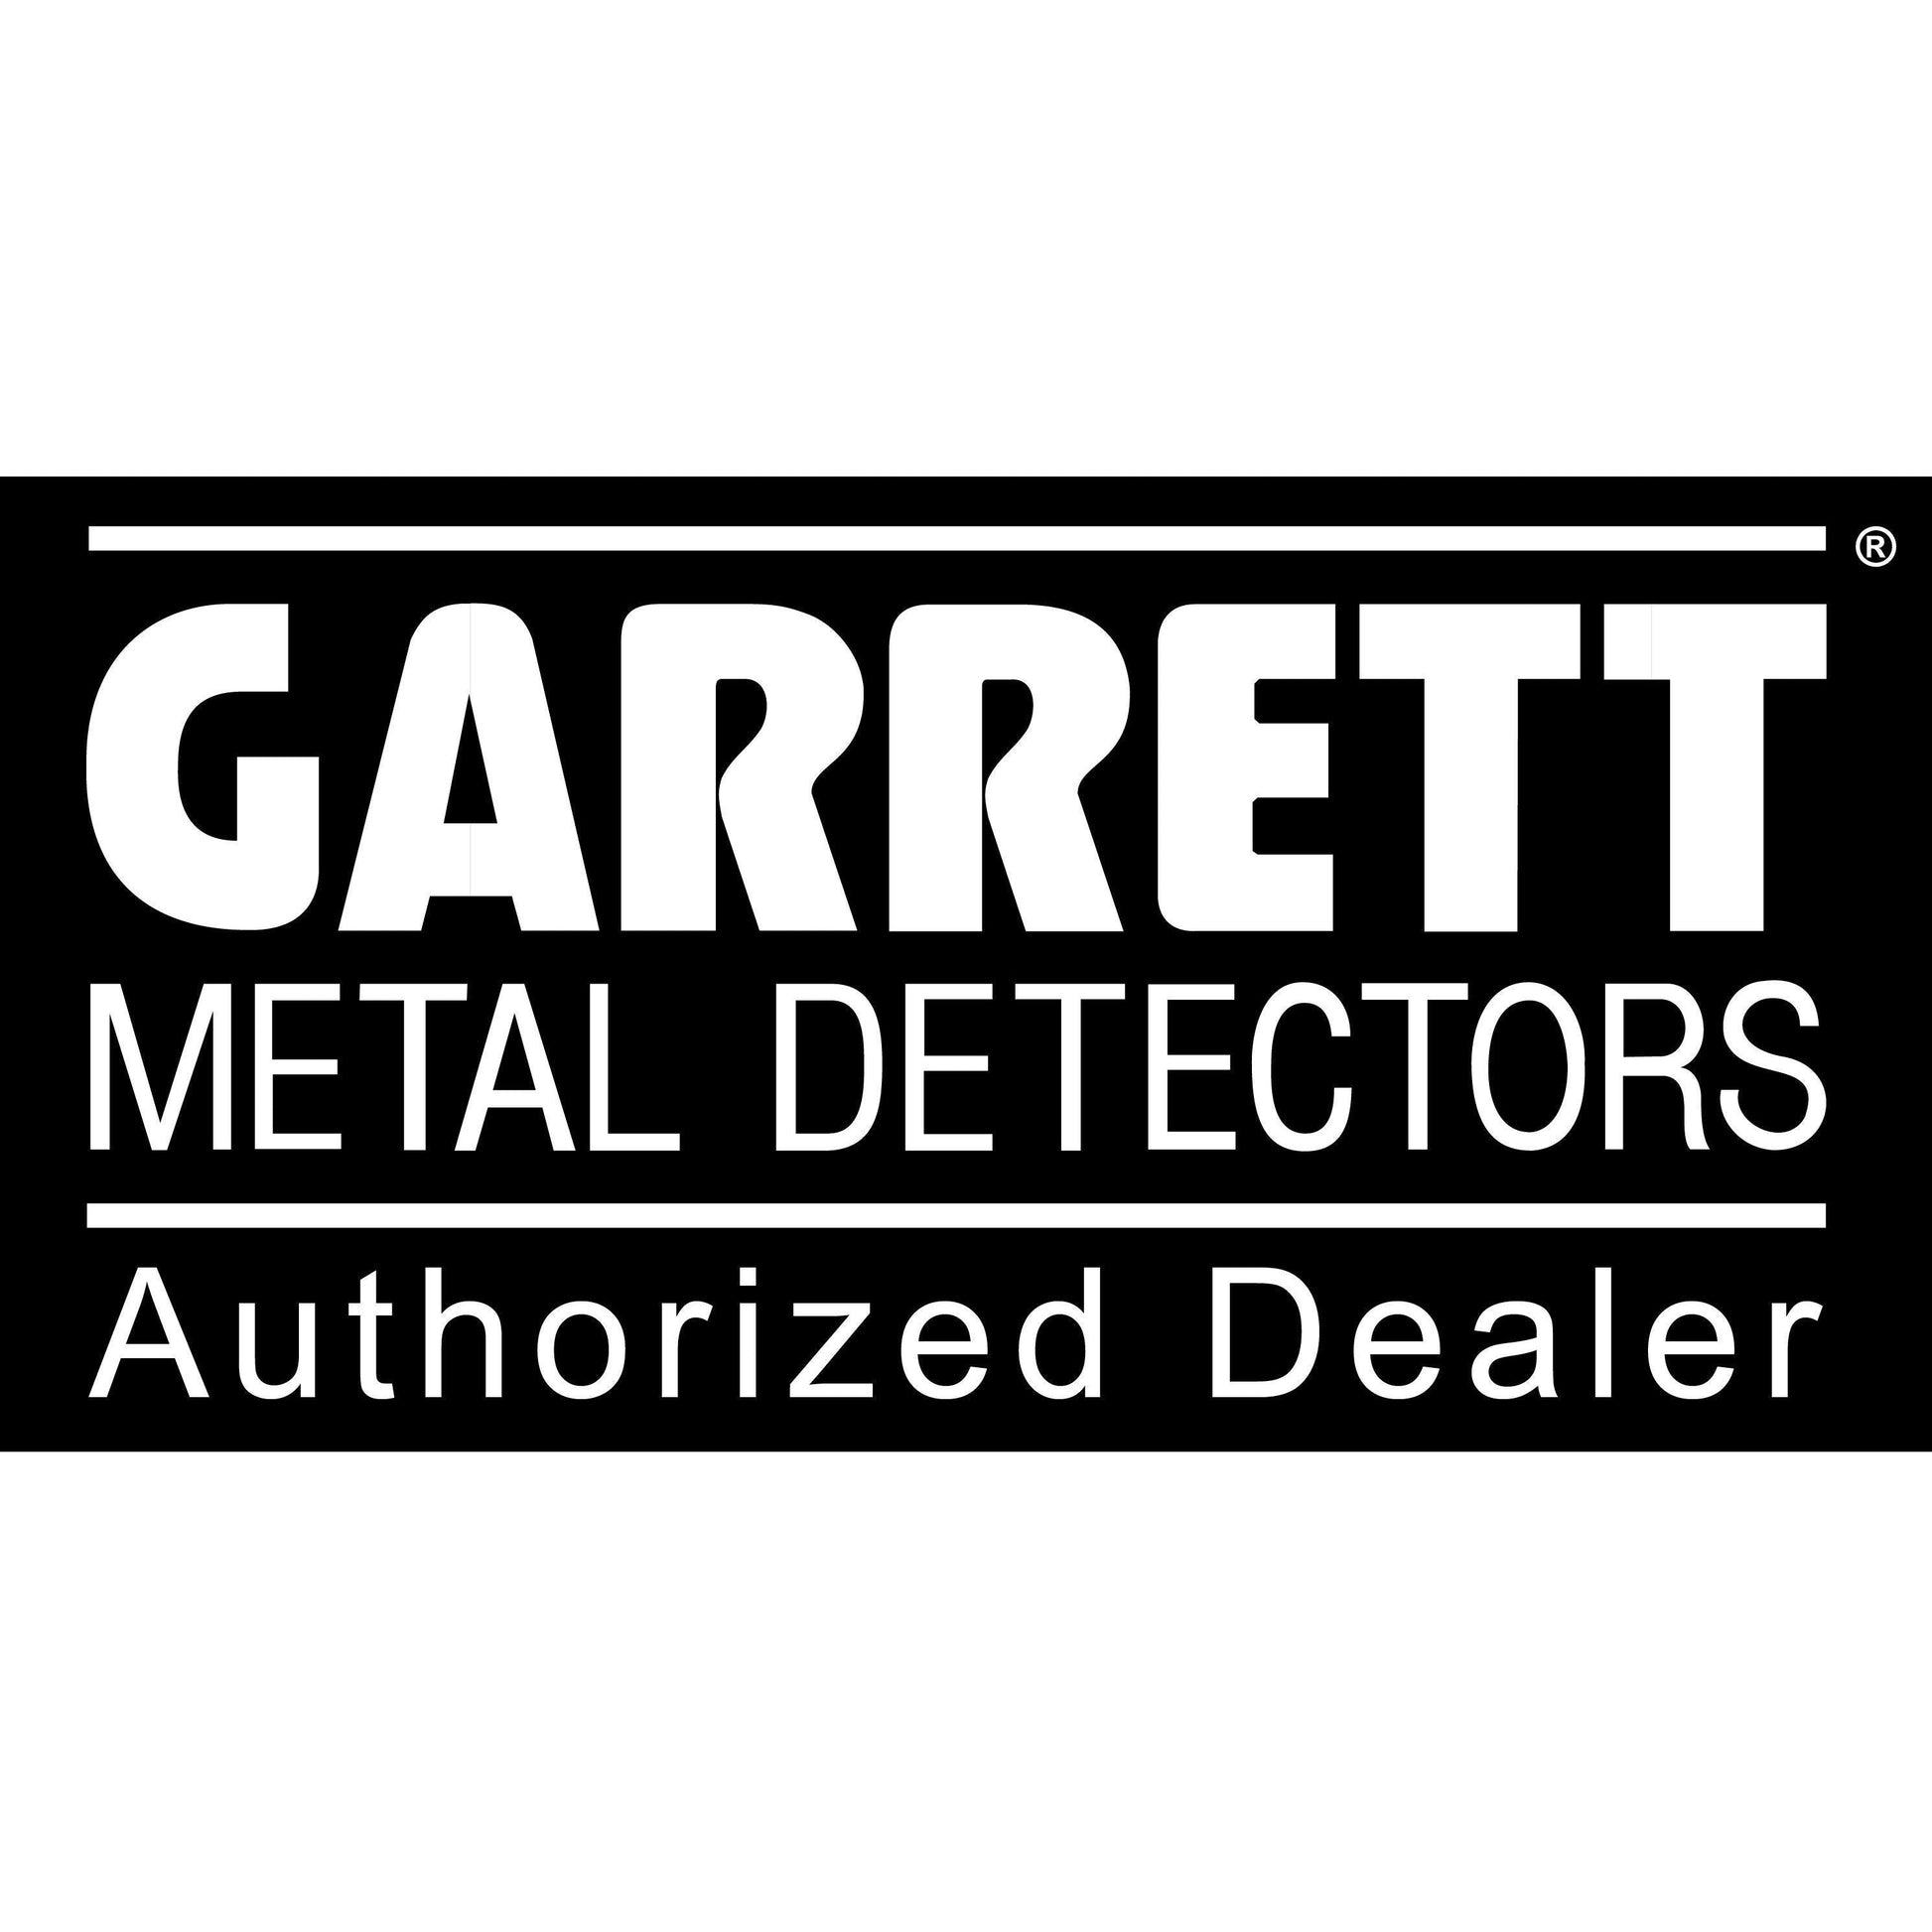 Garrett WT-1 Wireless Transmitter-Destination Gold Detectors